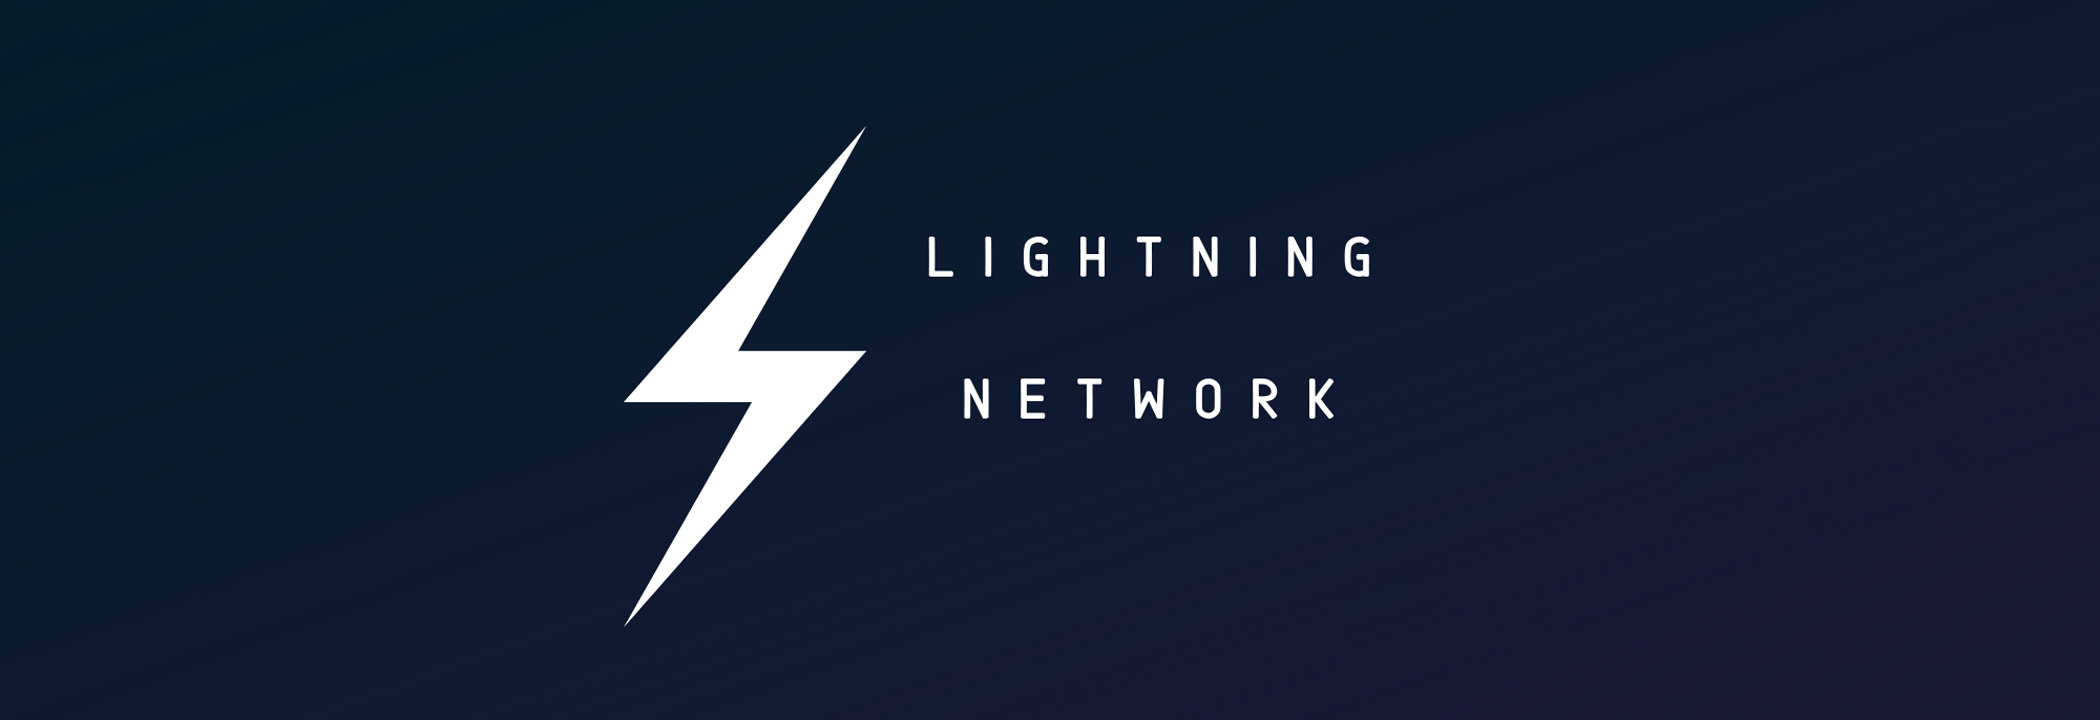 lightning network شبکه‌ی صاعقه